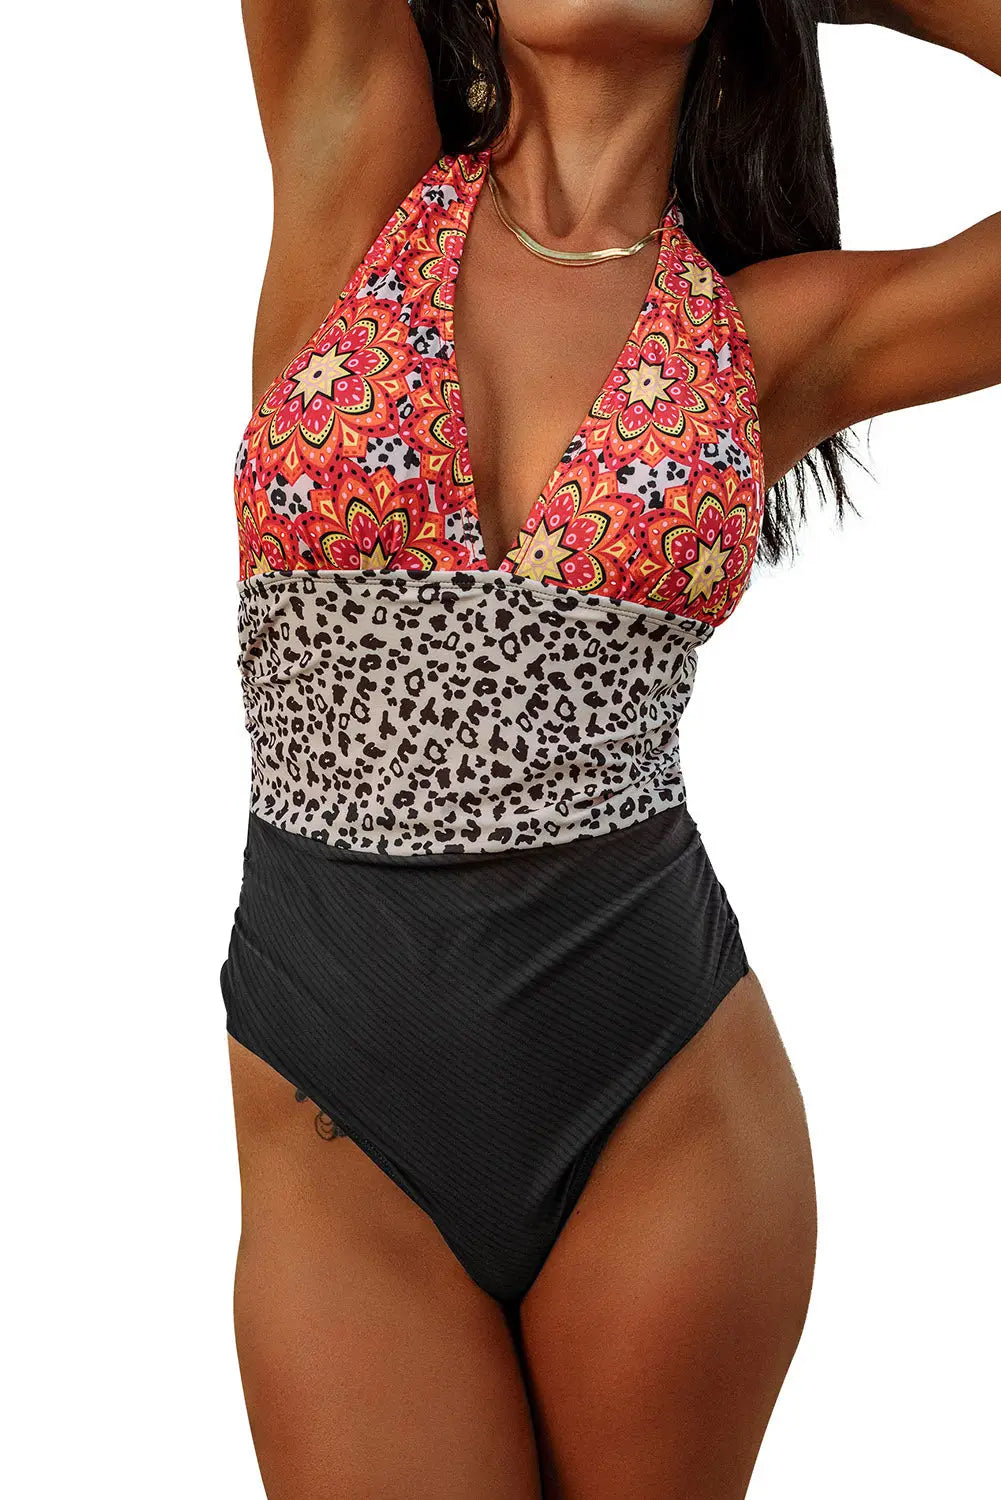 Retro floral leopard stripes deep v neck one-piece swimwear - one piece swimsuits